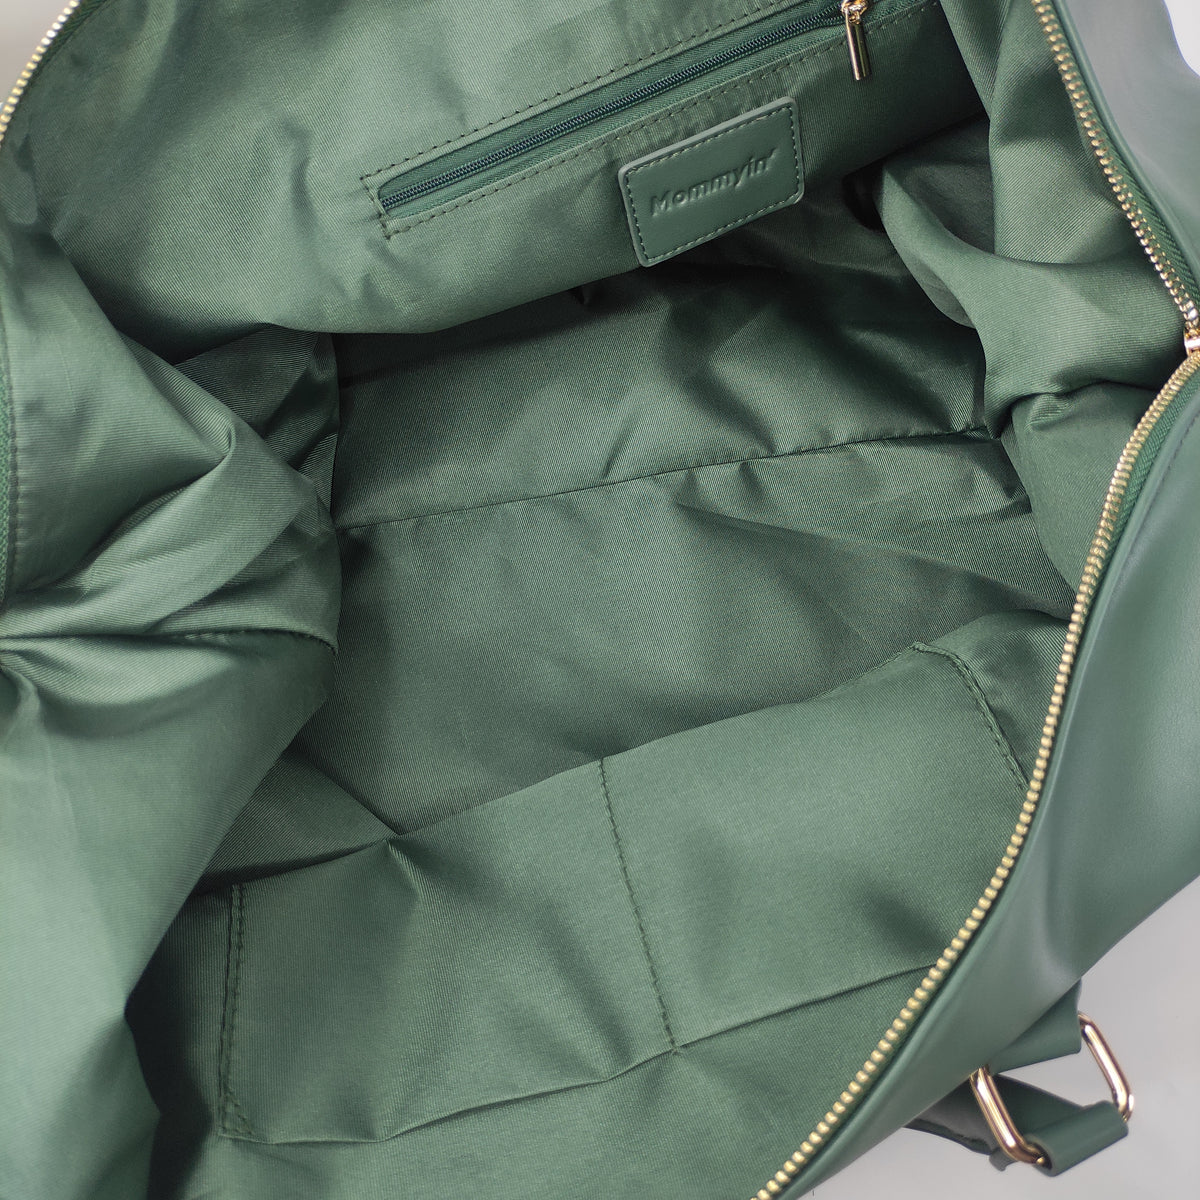 Mommyin Lifestyle Weekender Bag - Green Vegan Leather